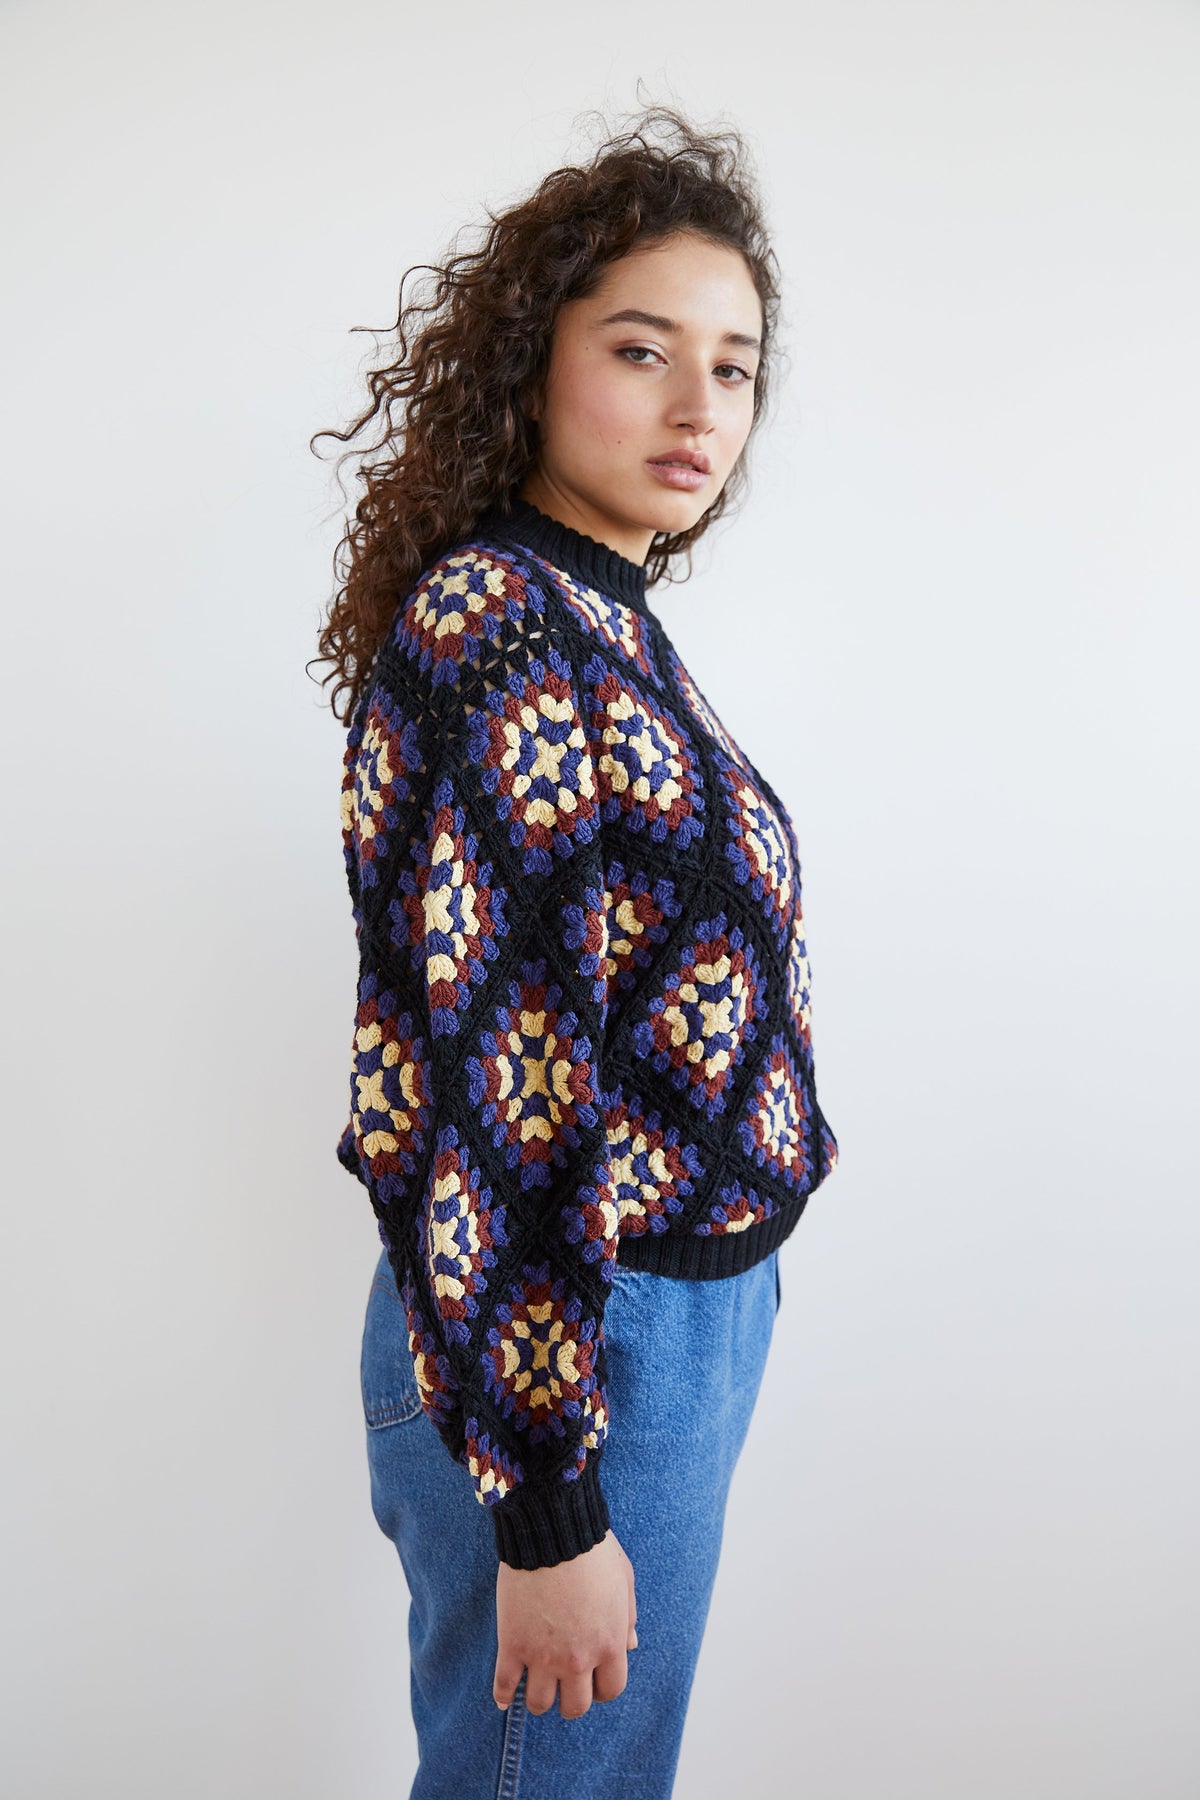 Adult Crochet Square Sweater - Pale Black